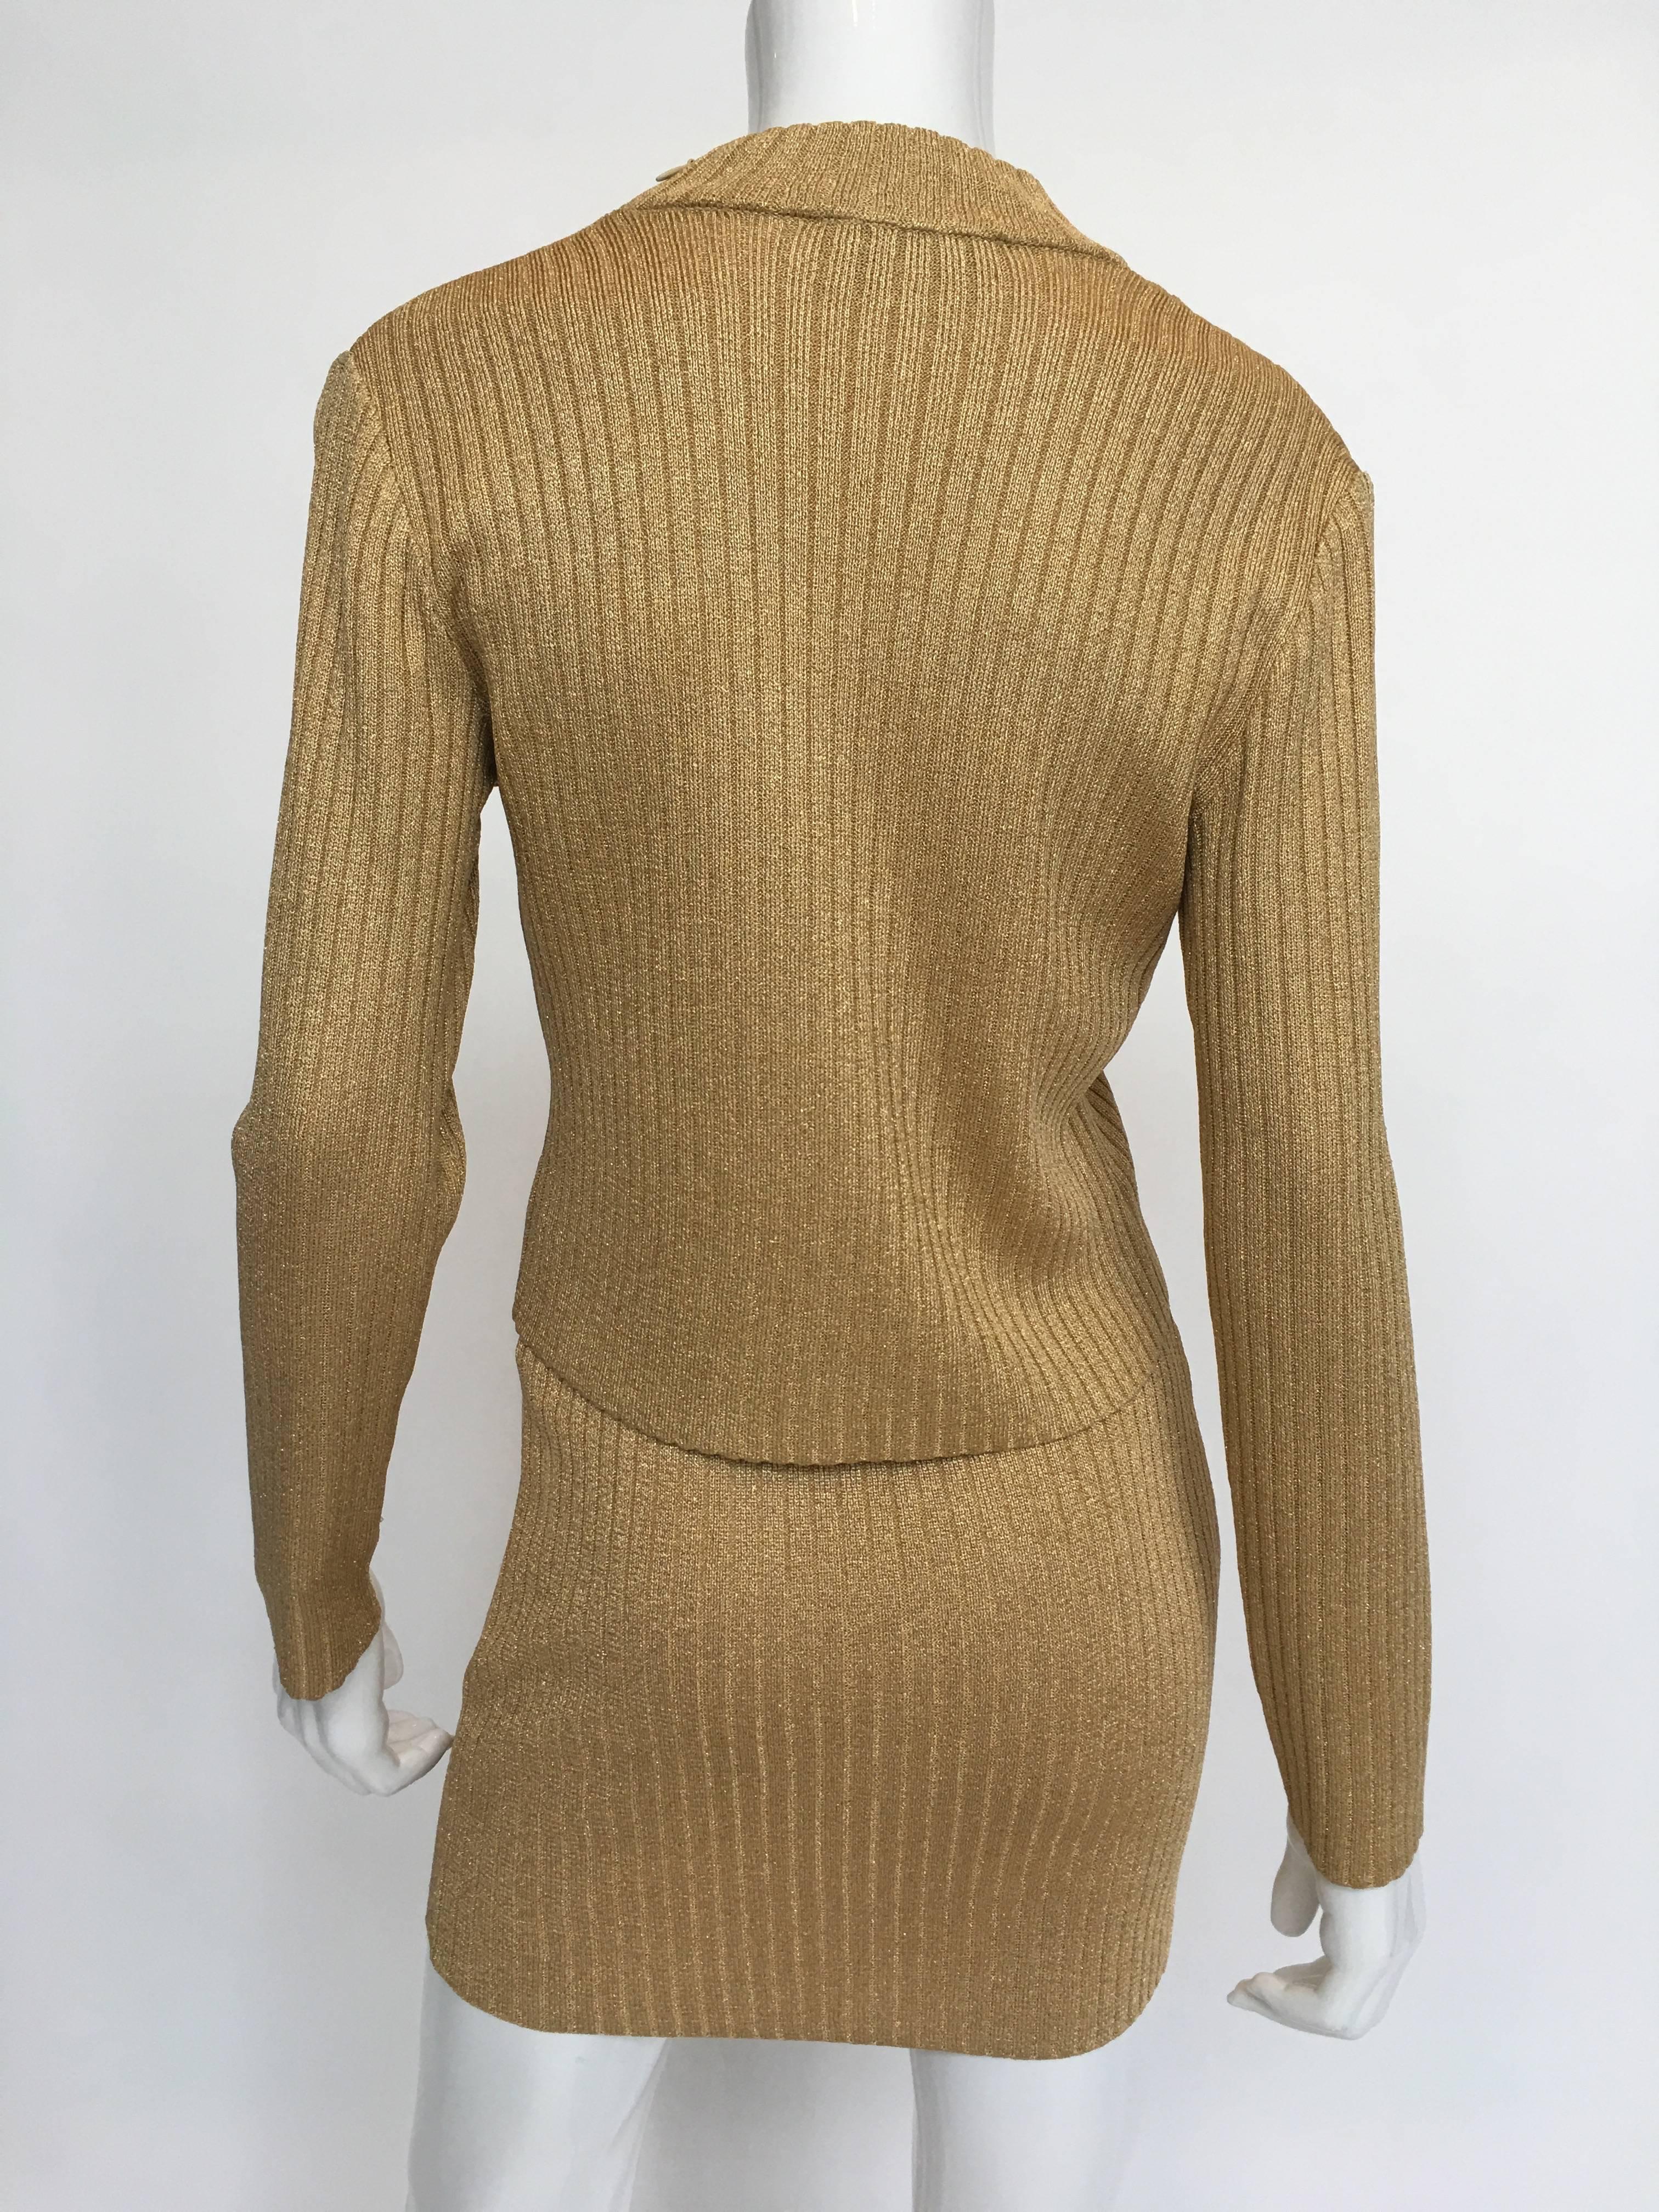 1990s St John Gold Knit Skirt Set 

Size Label: "P"

Measurements - taken flat
Top:
Shoulders - seam to seam:  16"
Sleeve - shoulder seam to wrist hem:  22"
Armpit to armpit: 17.5"
Length: 20.5"

Skirt:
Waist: